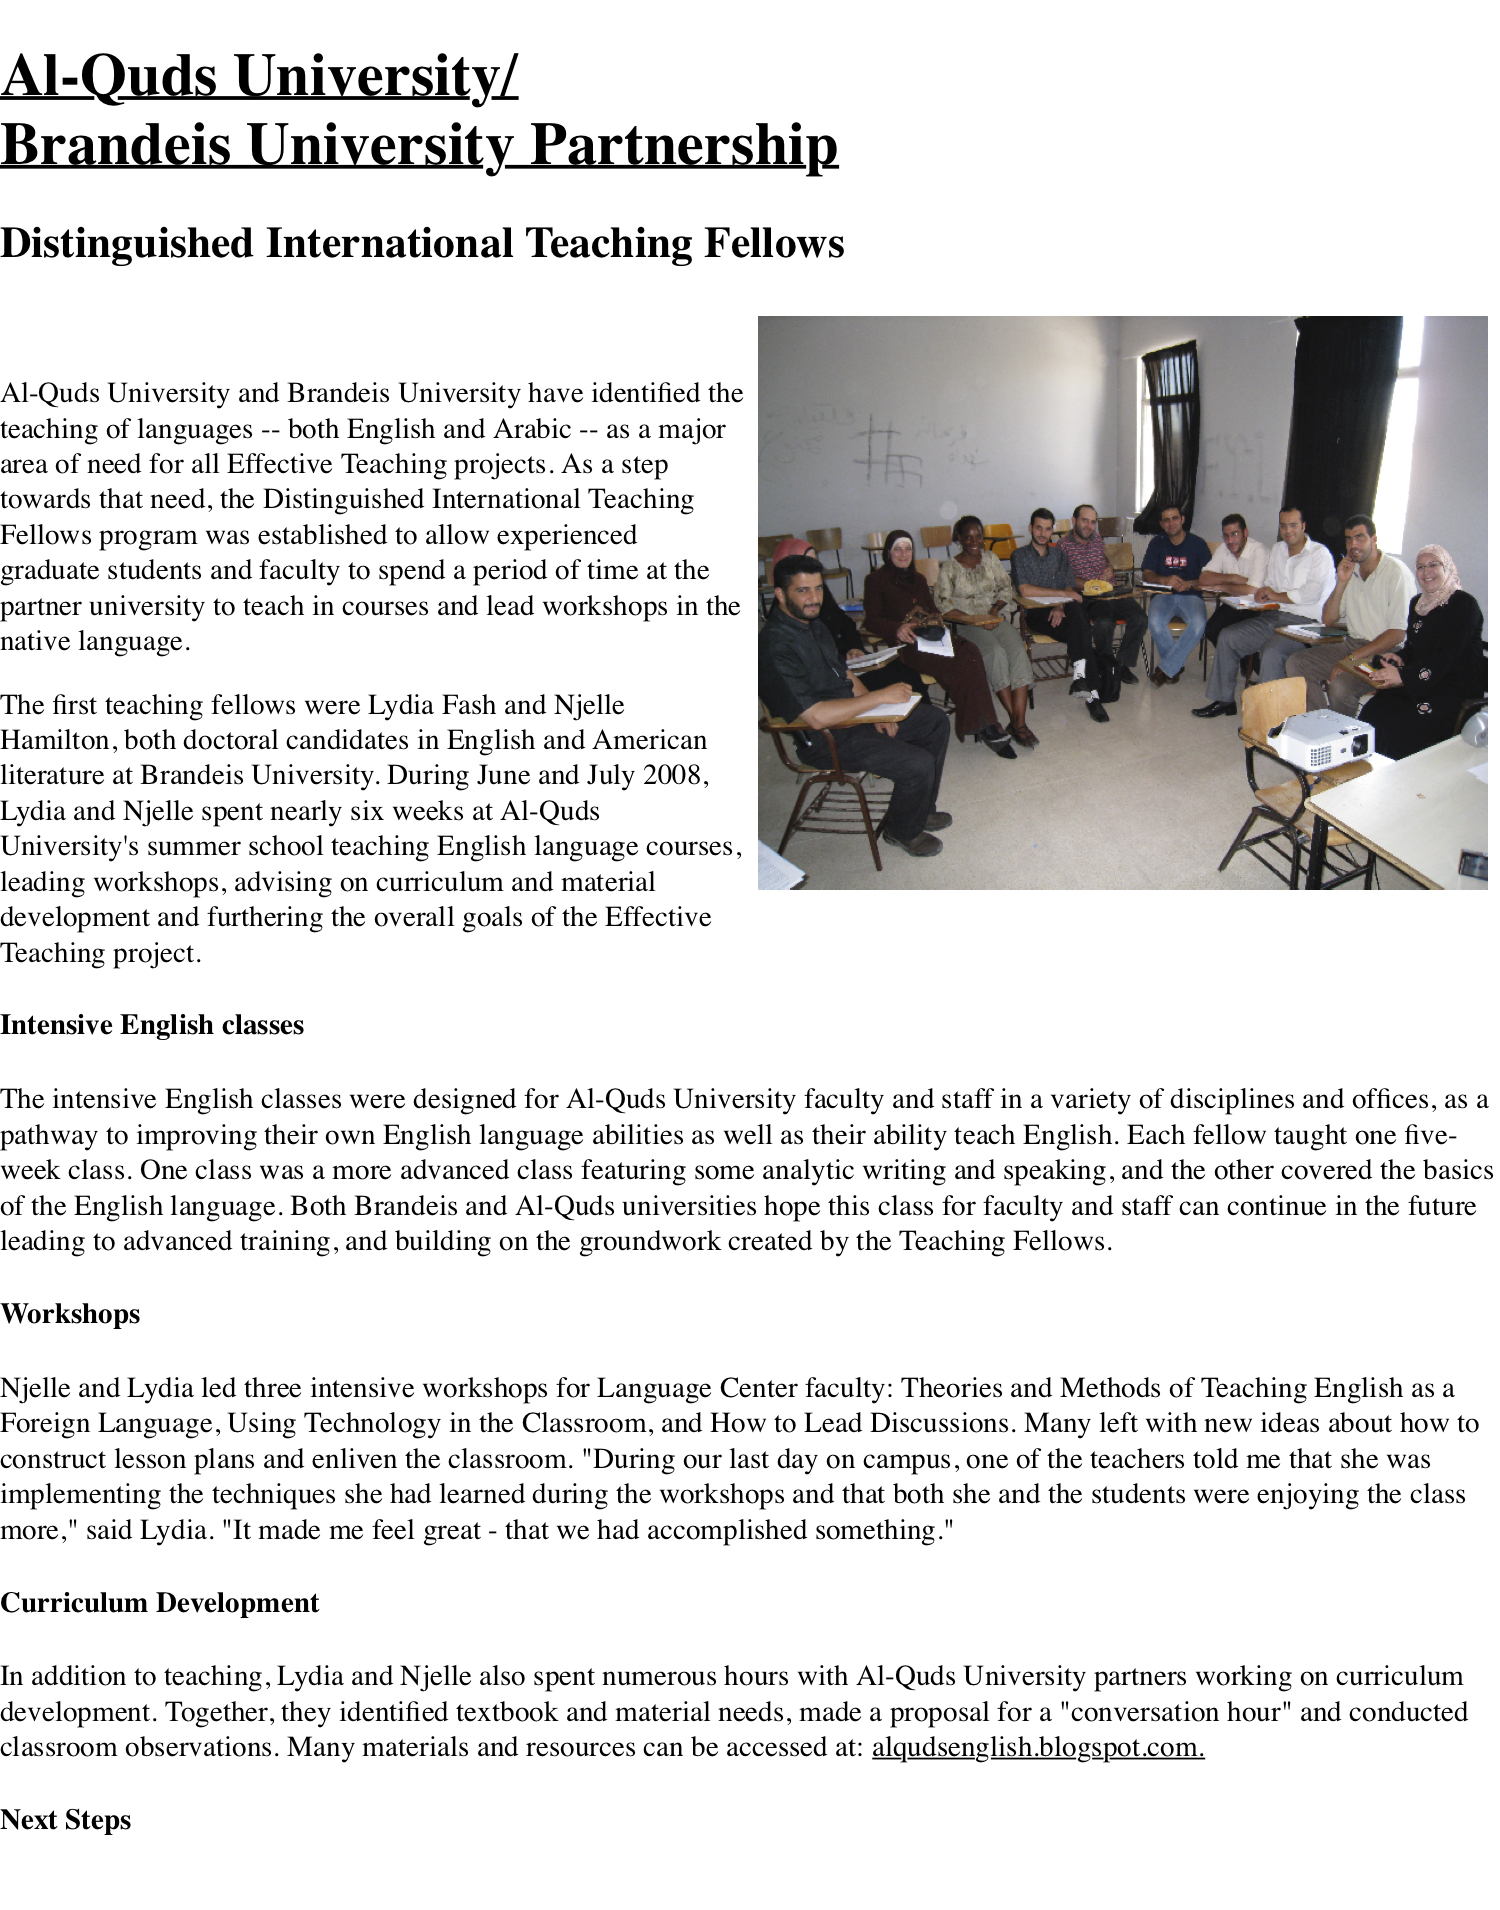 Distinguished International Teaching Fellows | Administrative Exchanges | Al-Quds University : Brand.jpg